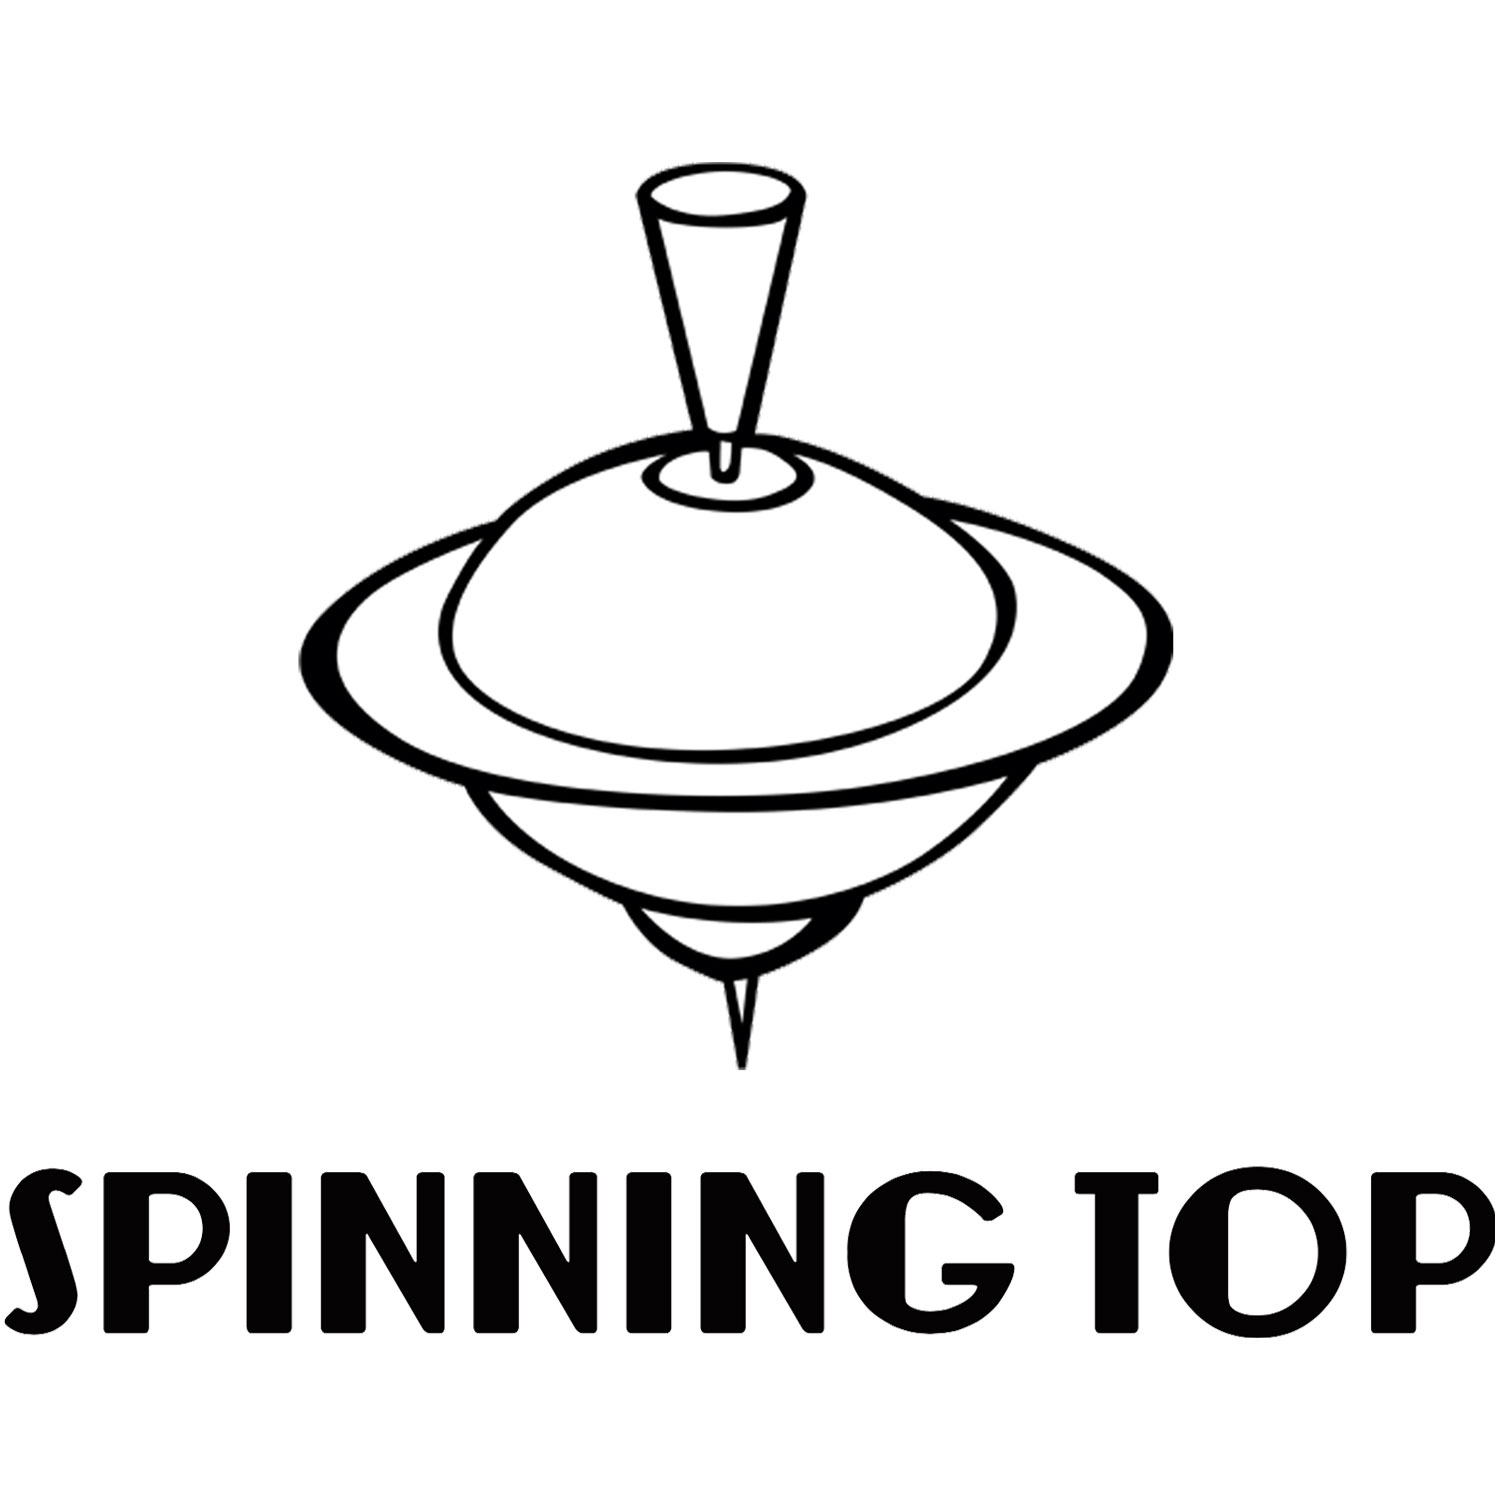 Spinning Top – Kung Fu Merch